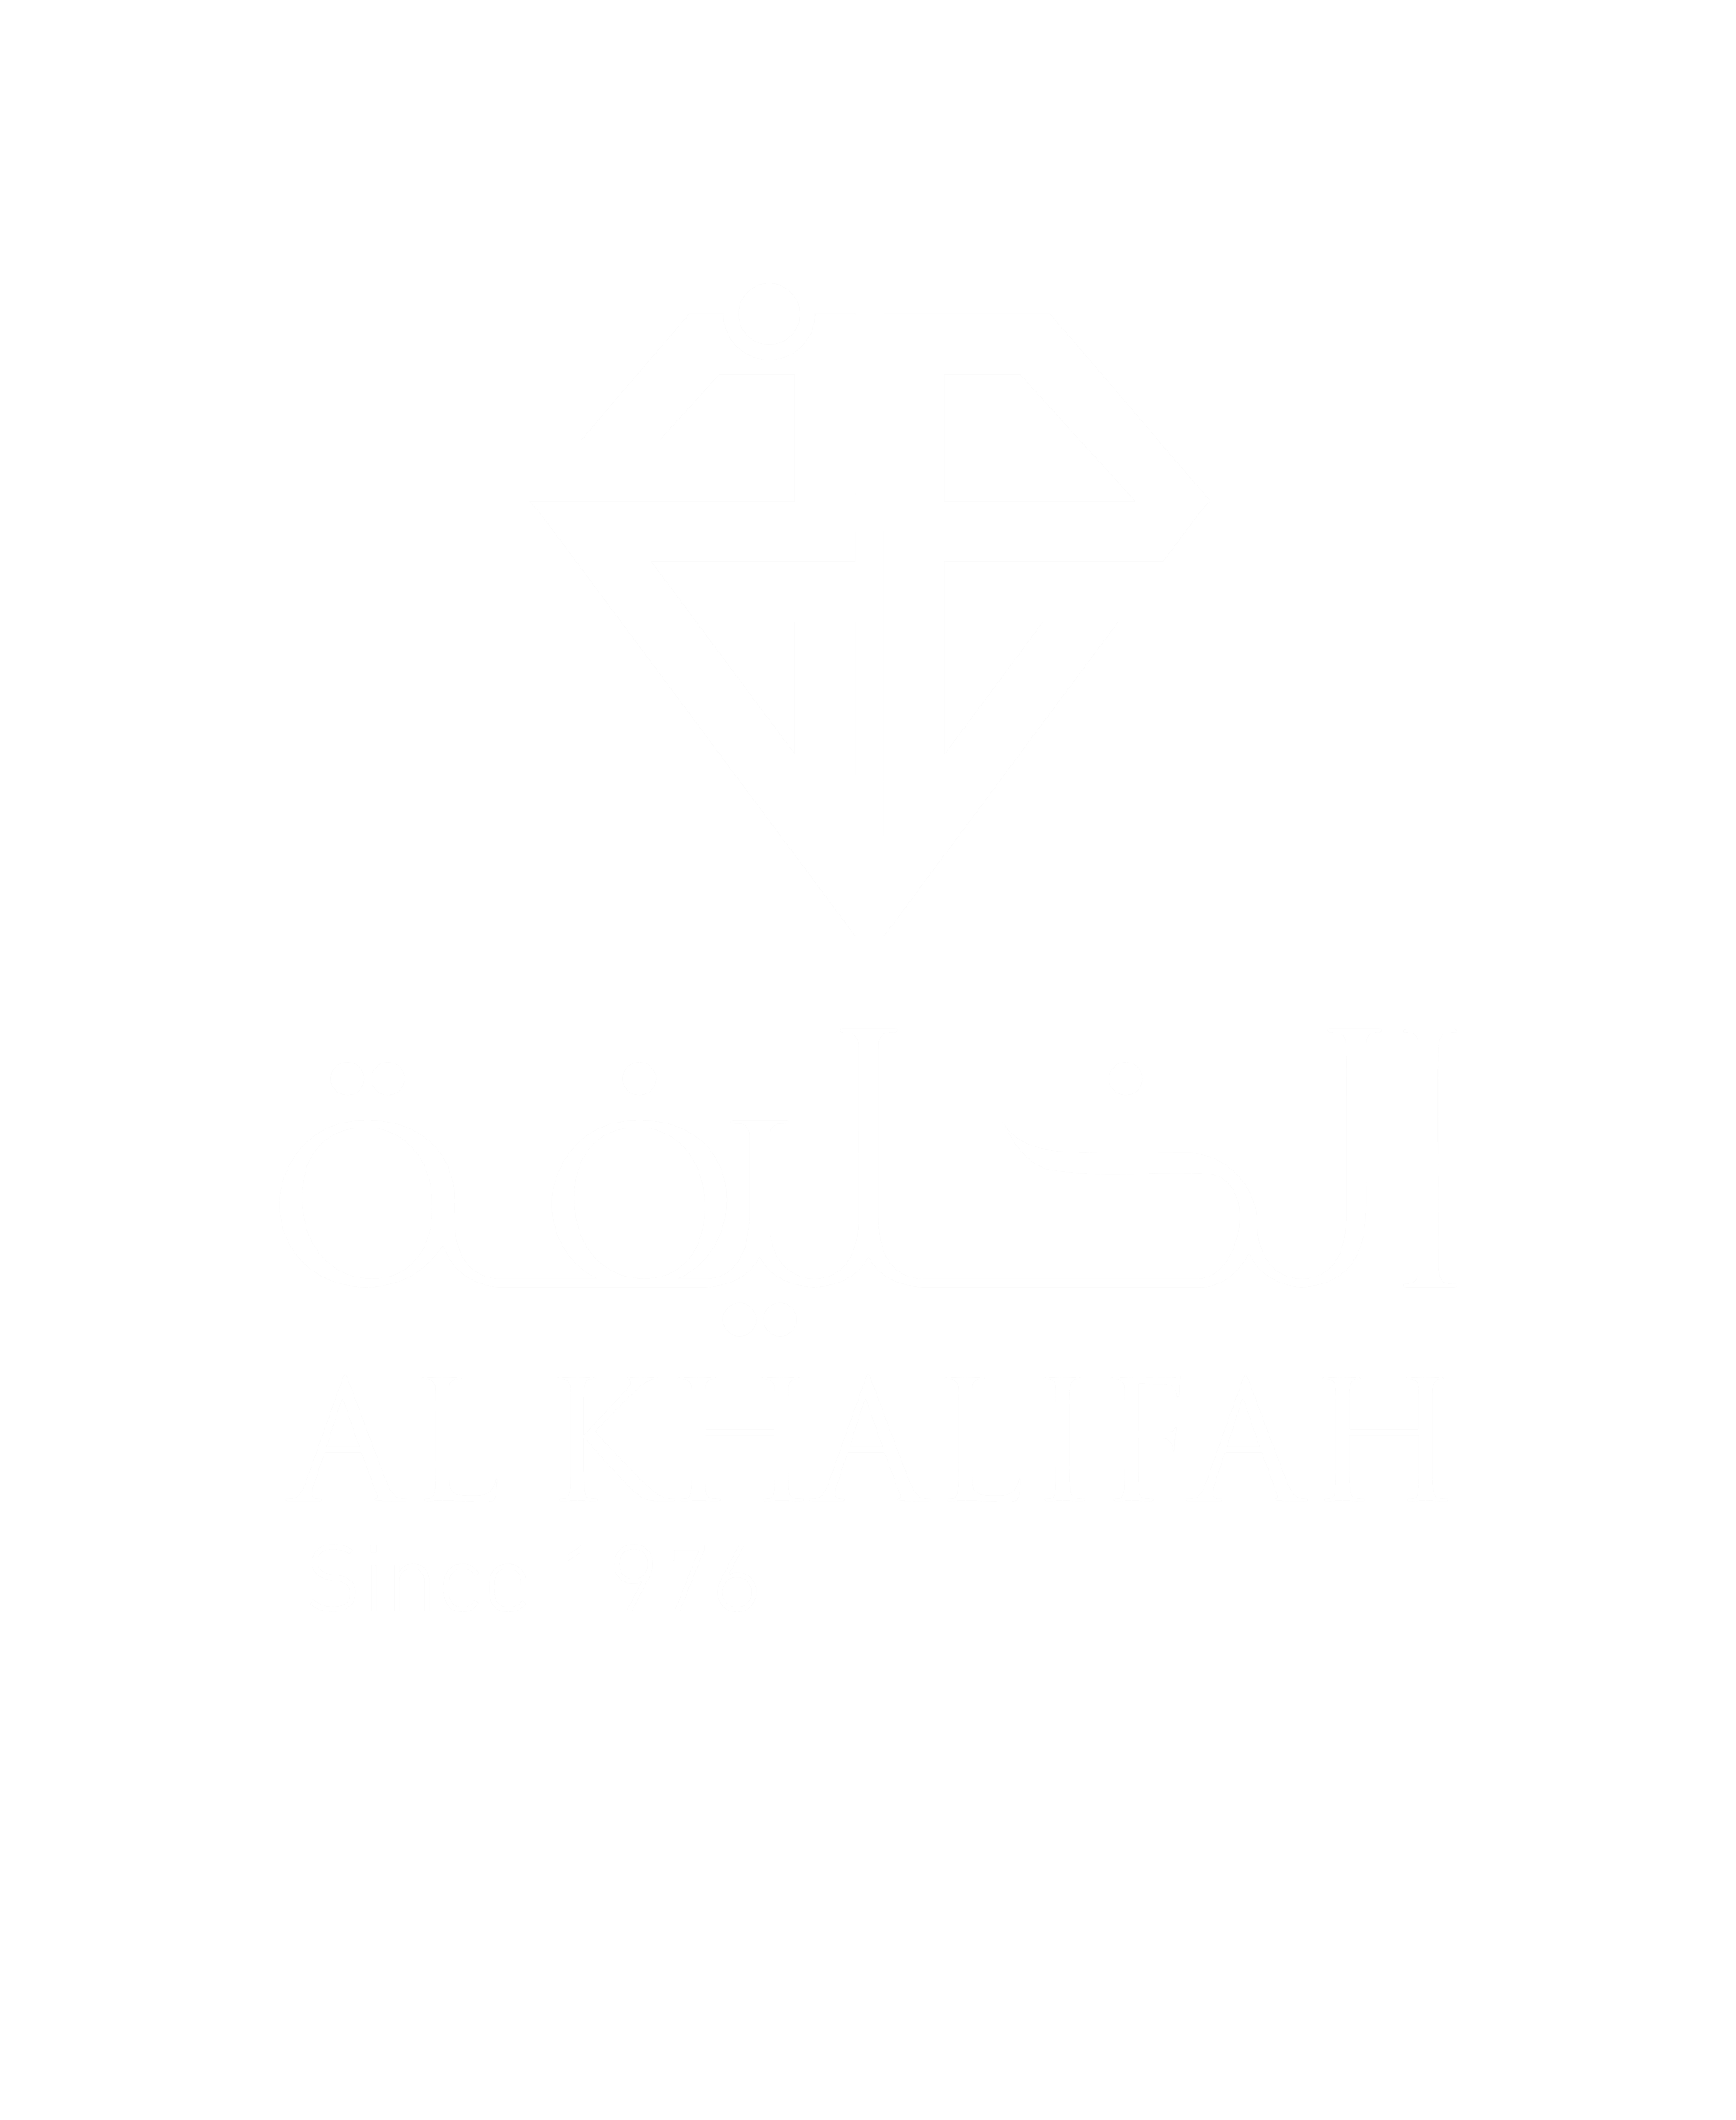 AlKALIFAH